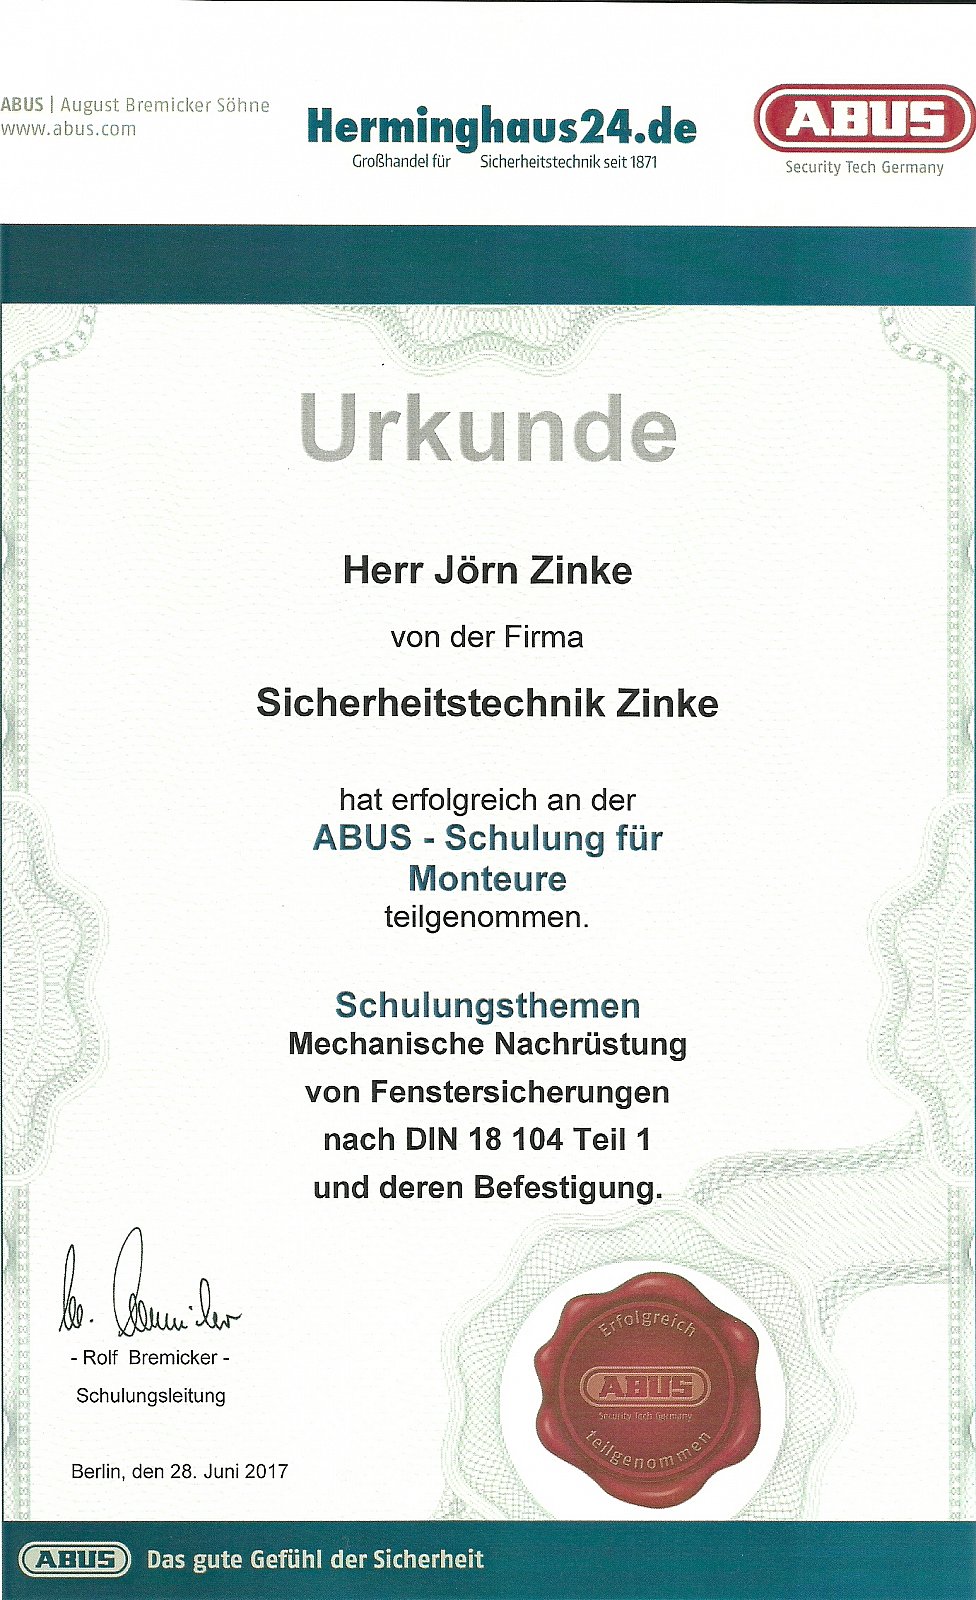 Zertifikate